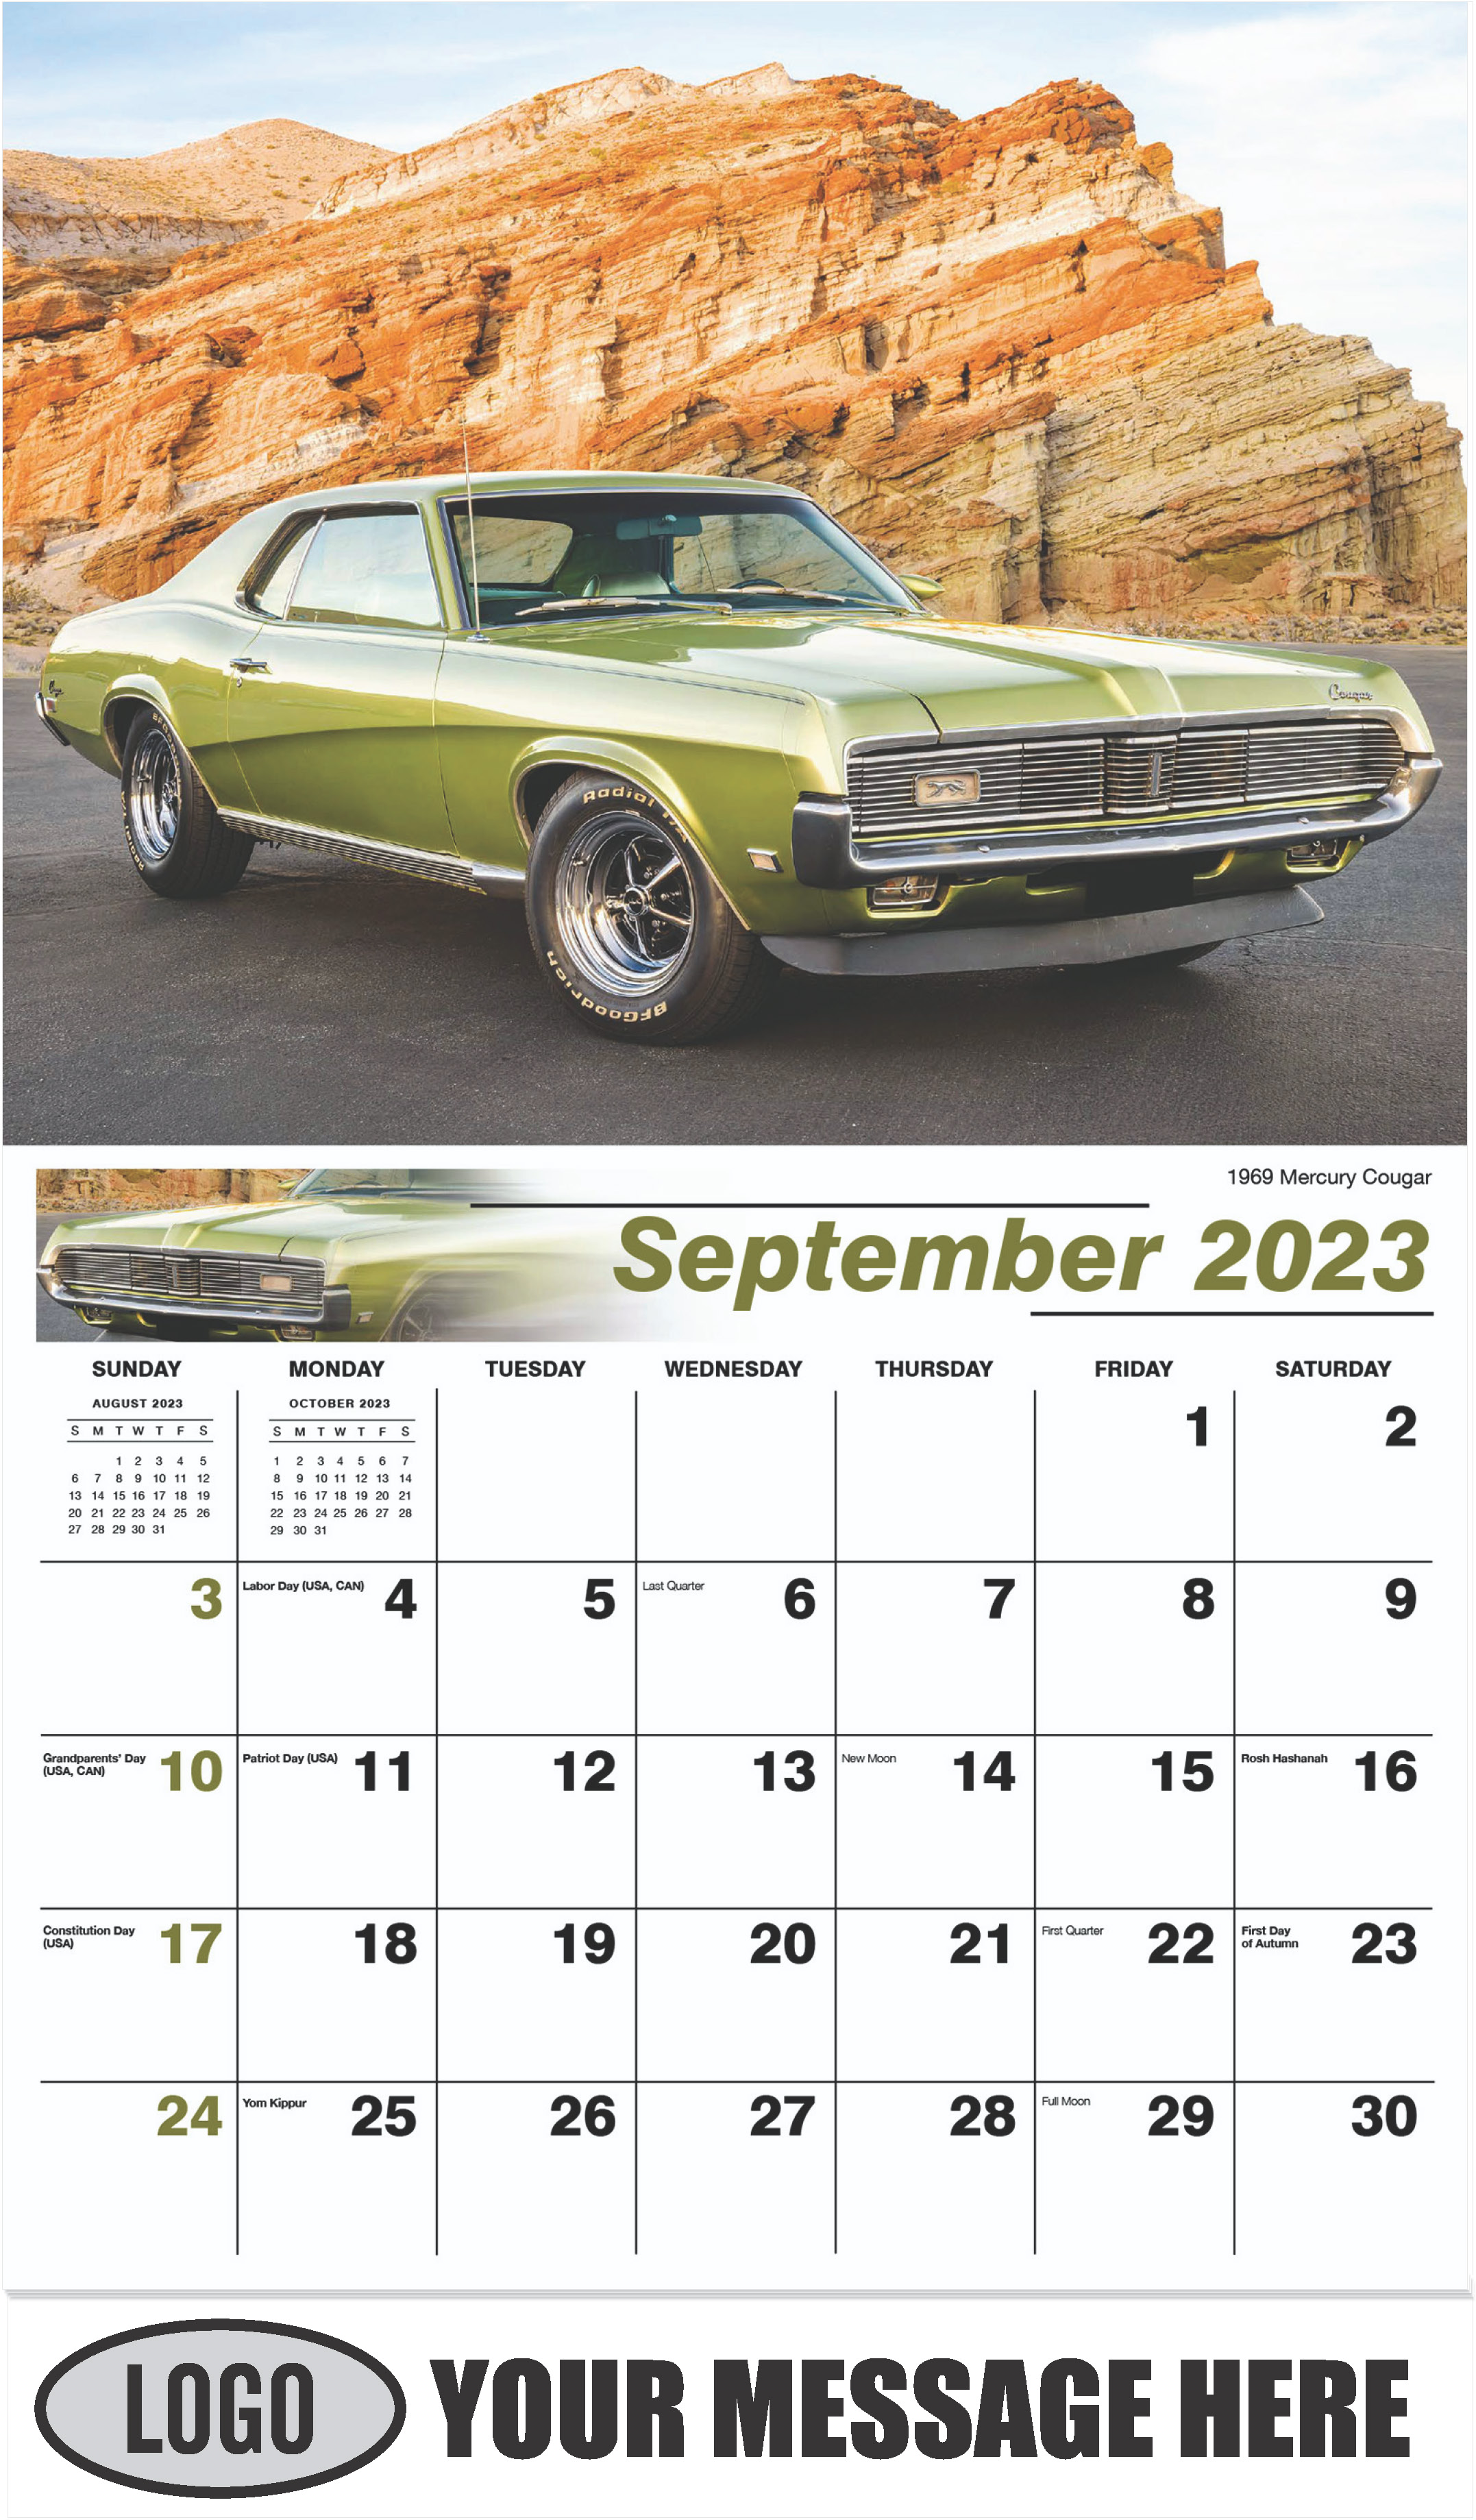 1969 Mercury Cougar - September - Henry's Heritage Ford Cars 2023 Promotional Calendar